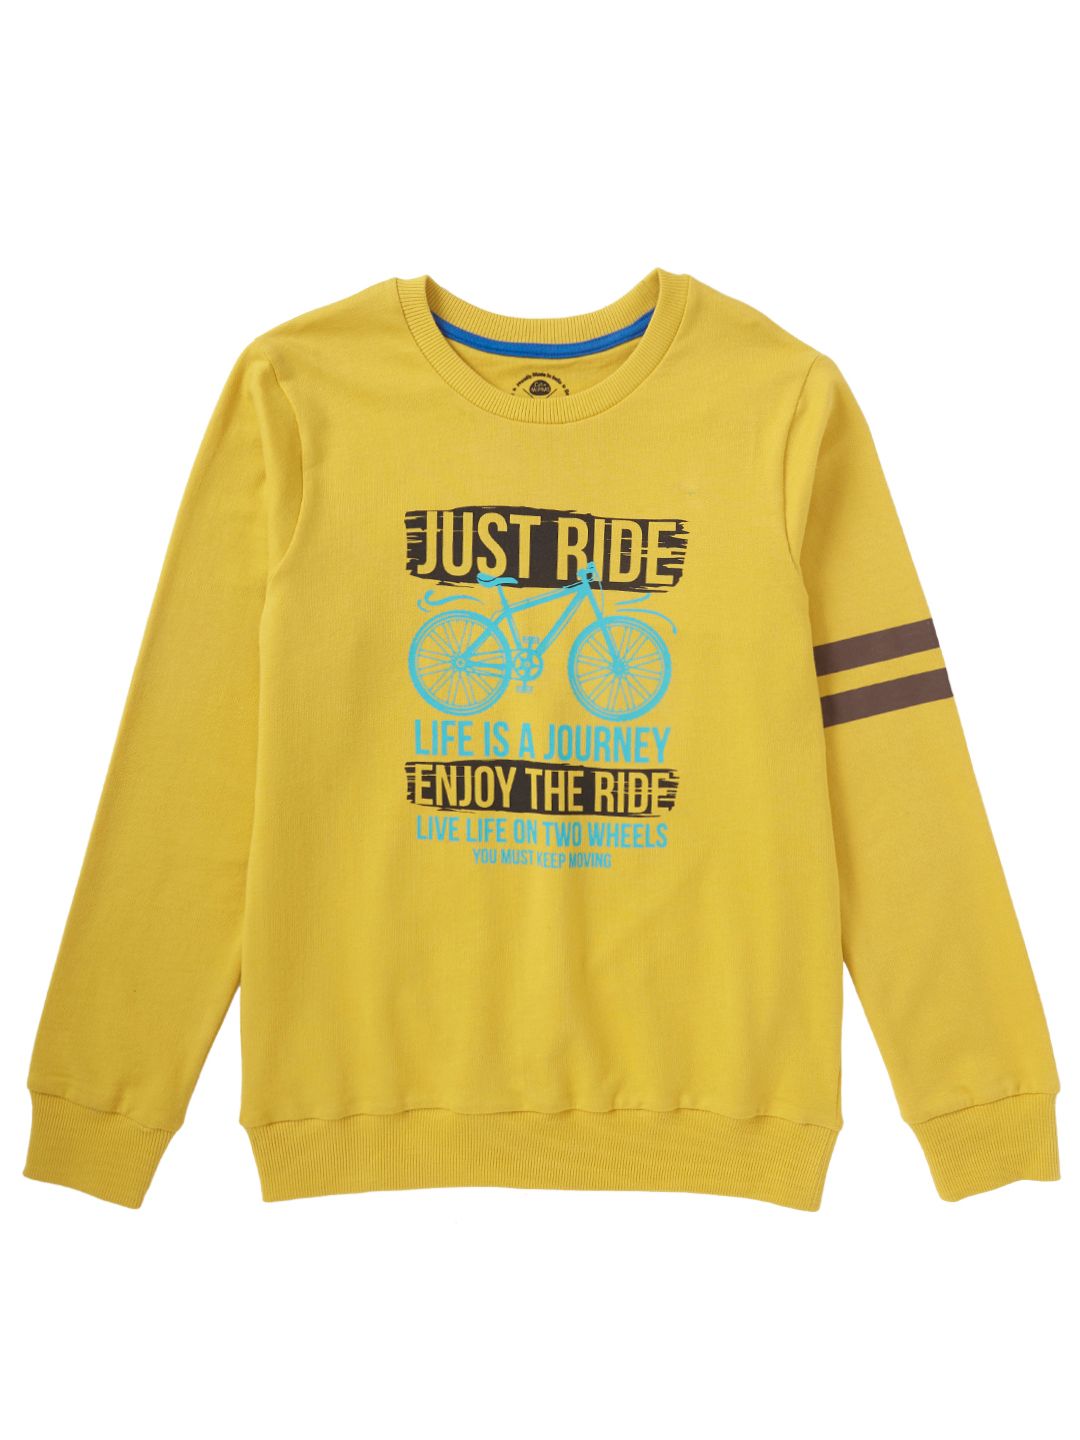 Buy Super Comfortable Boys Yellow Sweatshirt Online at Cub McPaws